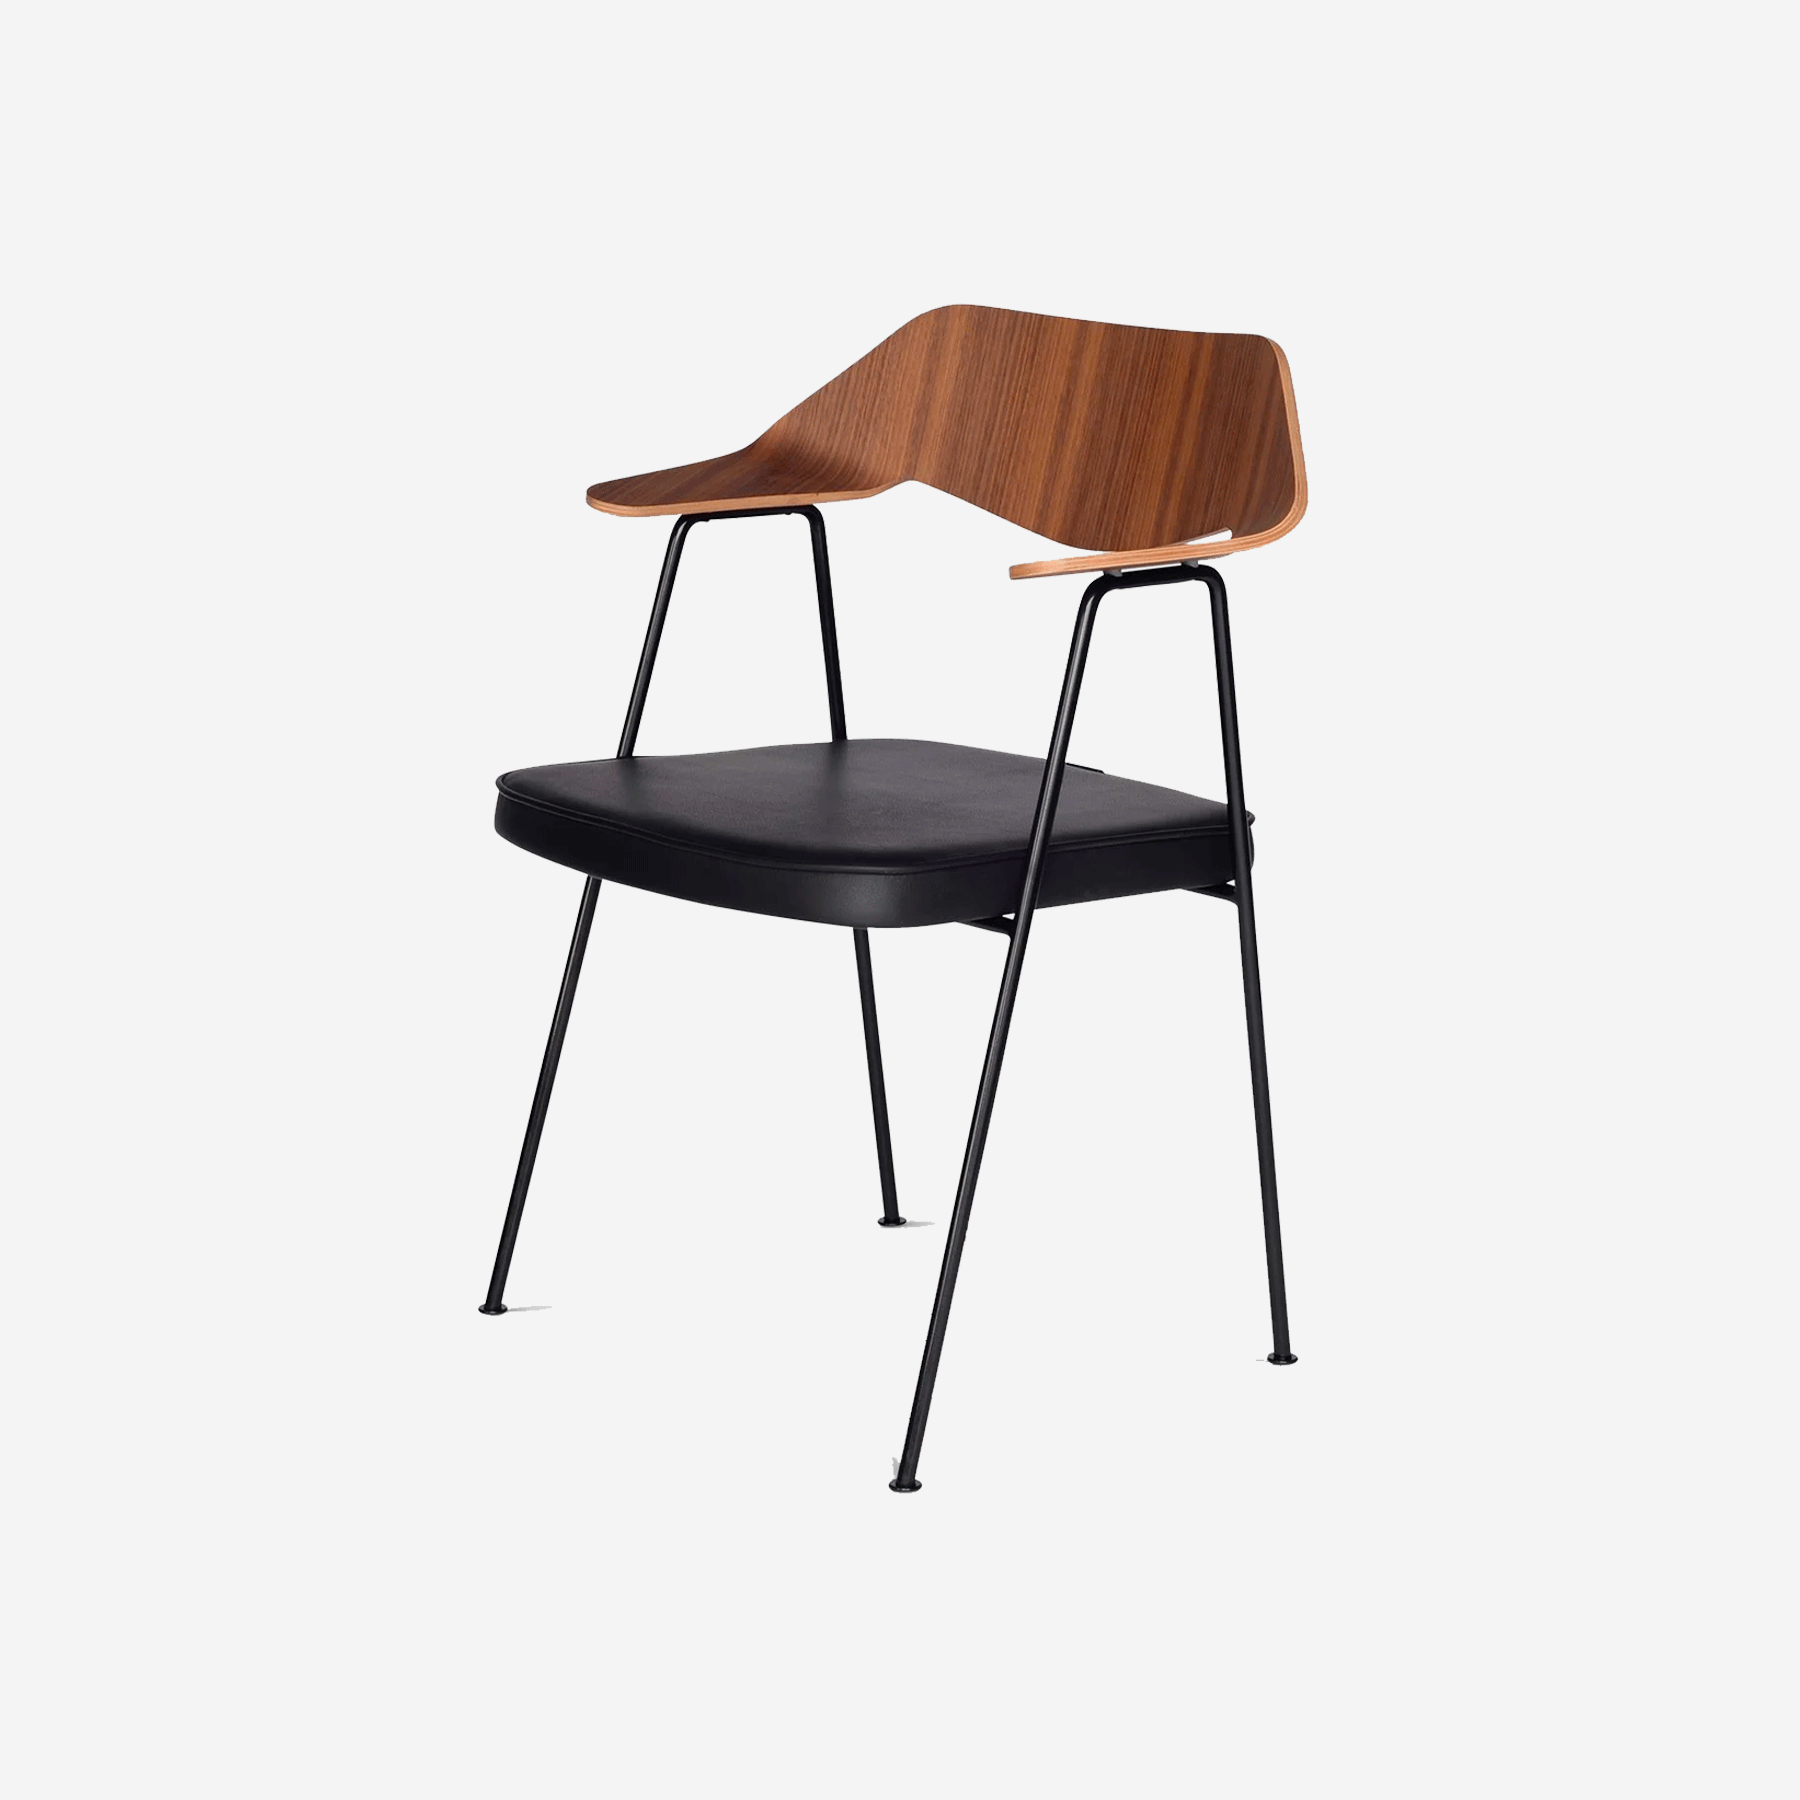 675 Chair, black frame - Moleta Munro Limited